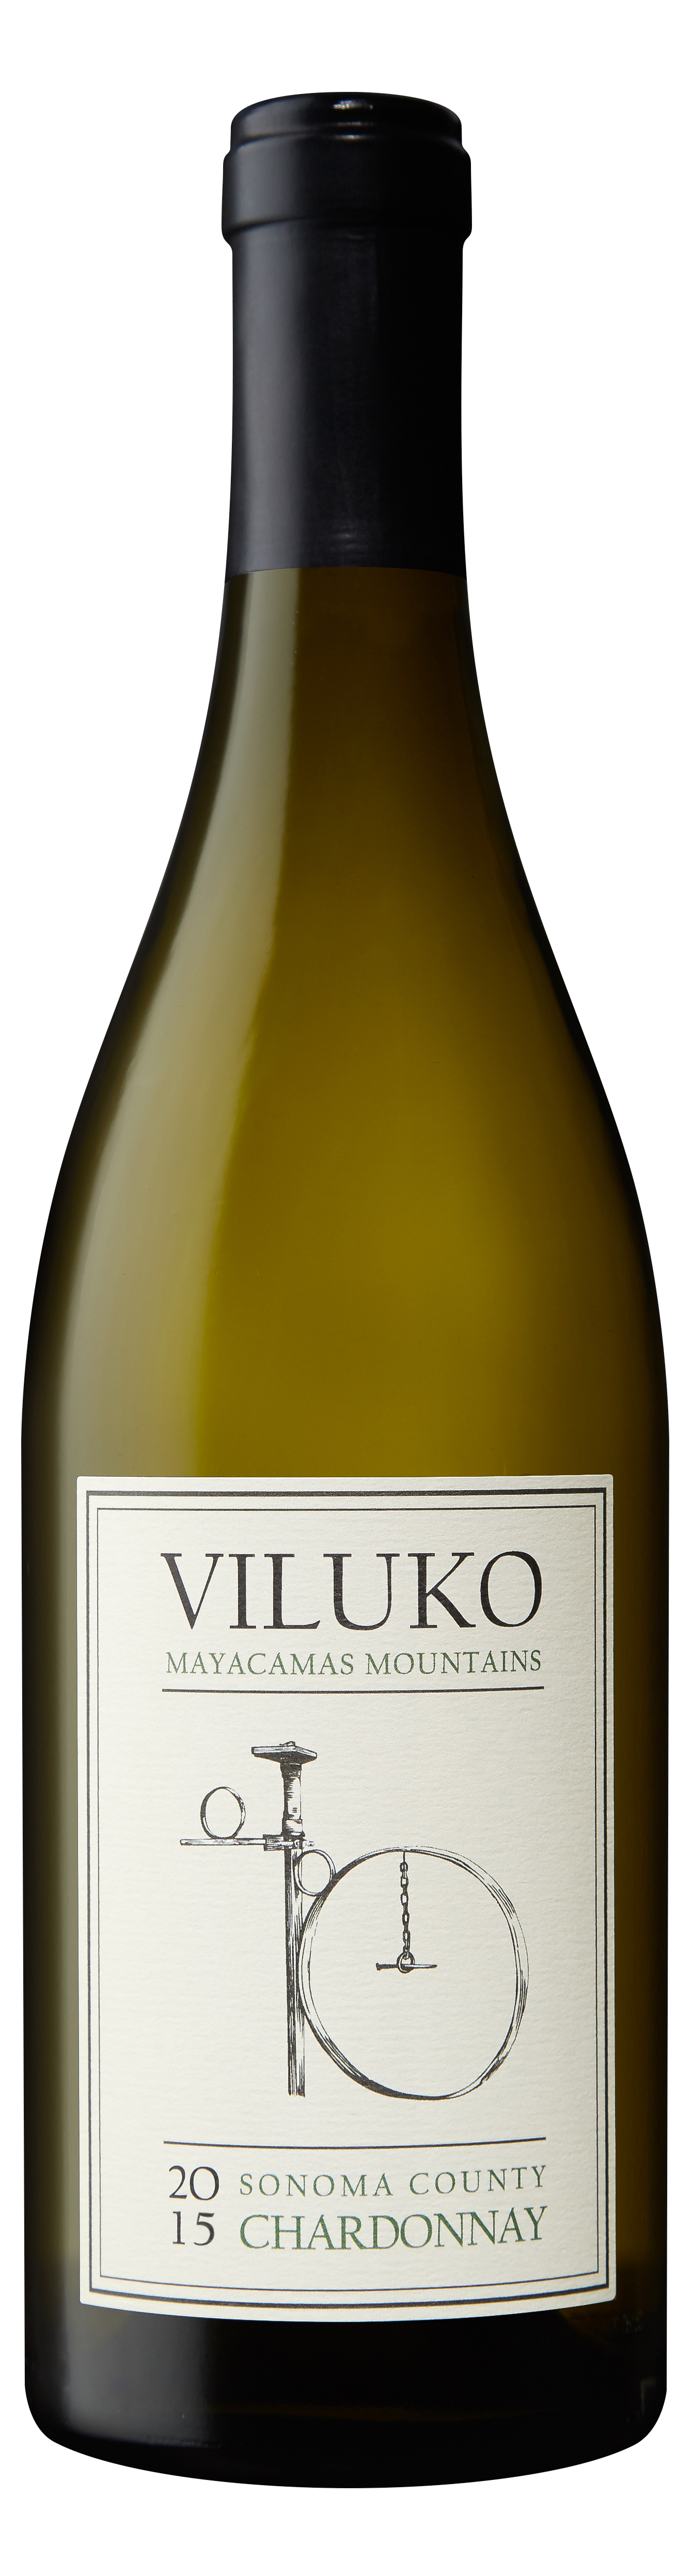 Product Image for 2015 Viluko Vineyards Chardonnay